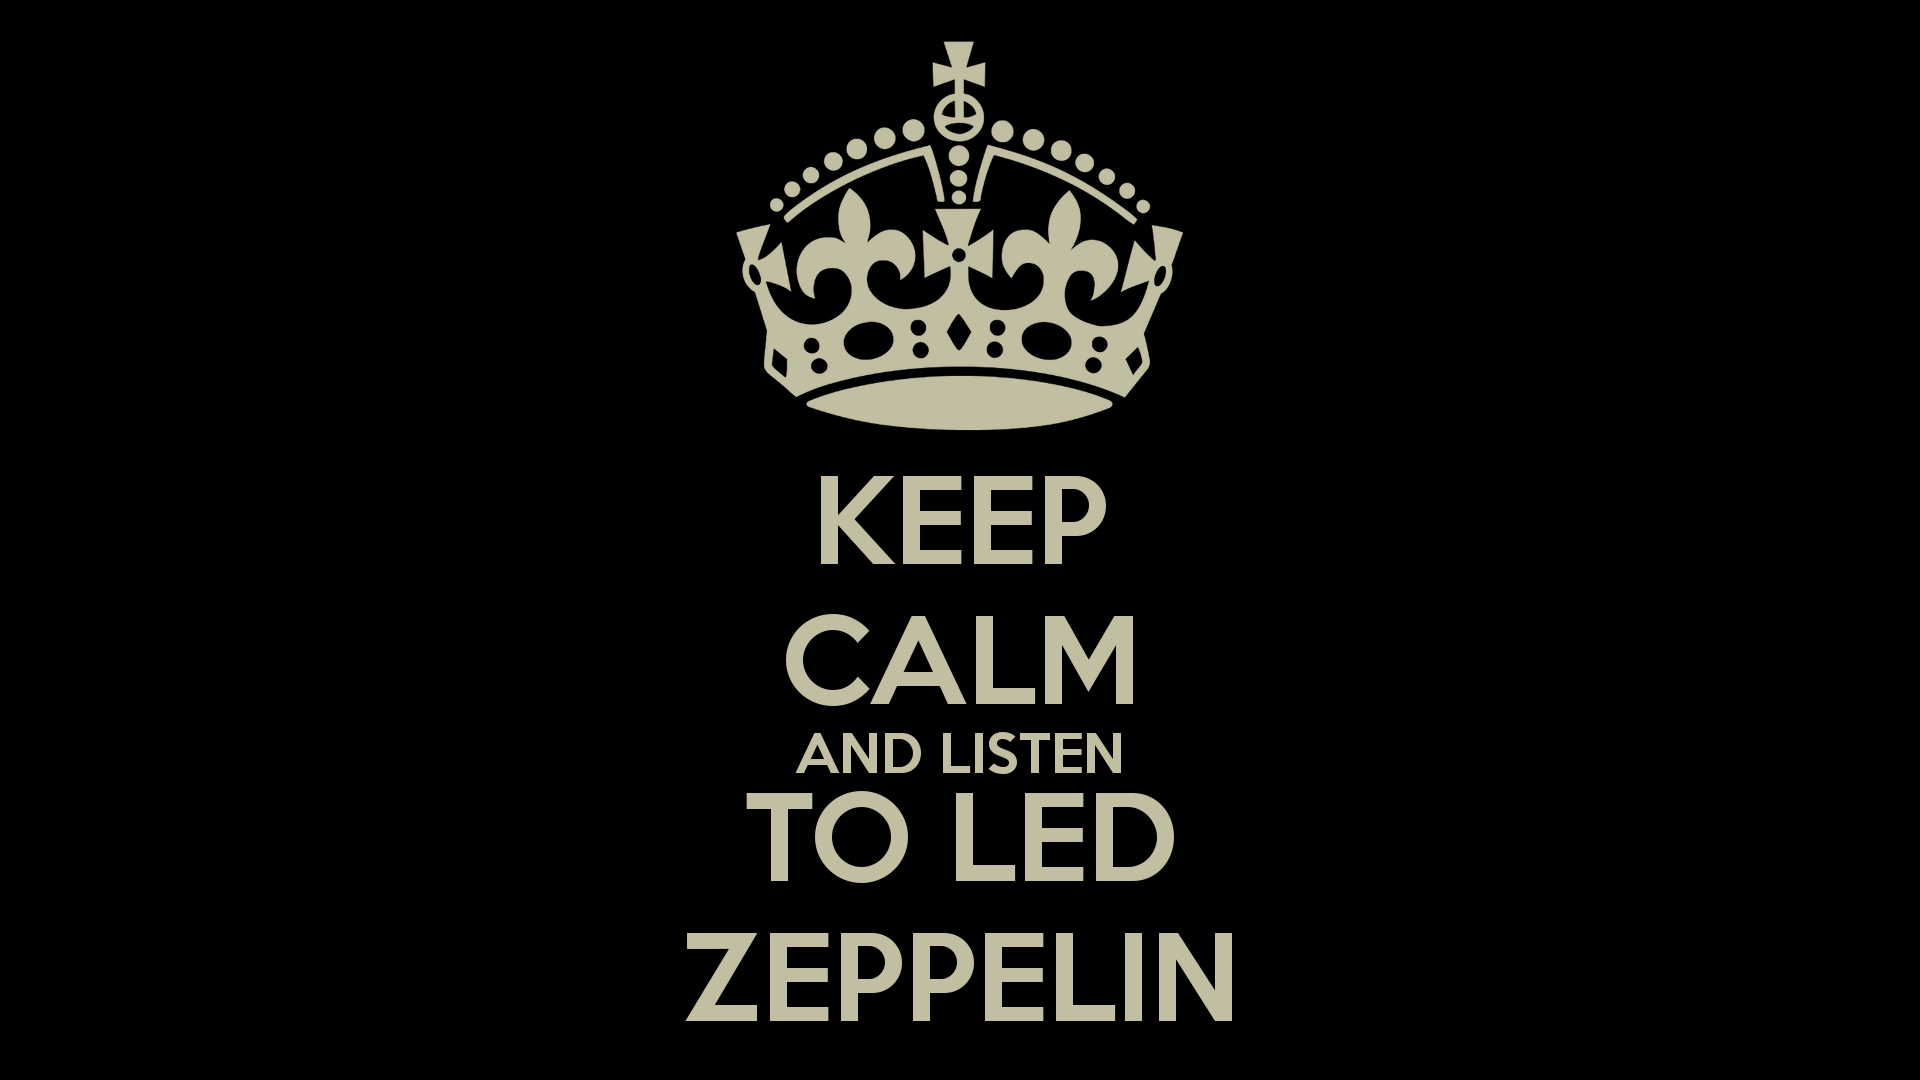 Wallpaper For > Led Zeppelin Wallpaper Widescreen